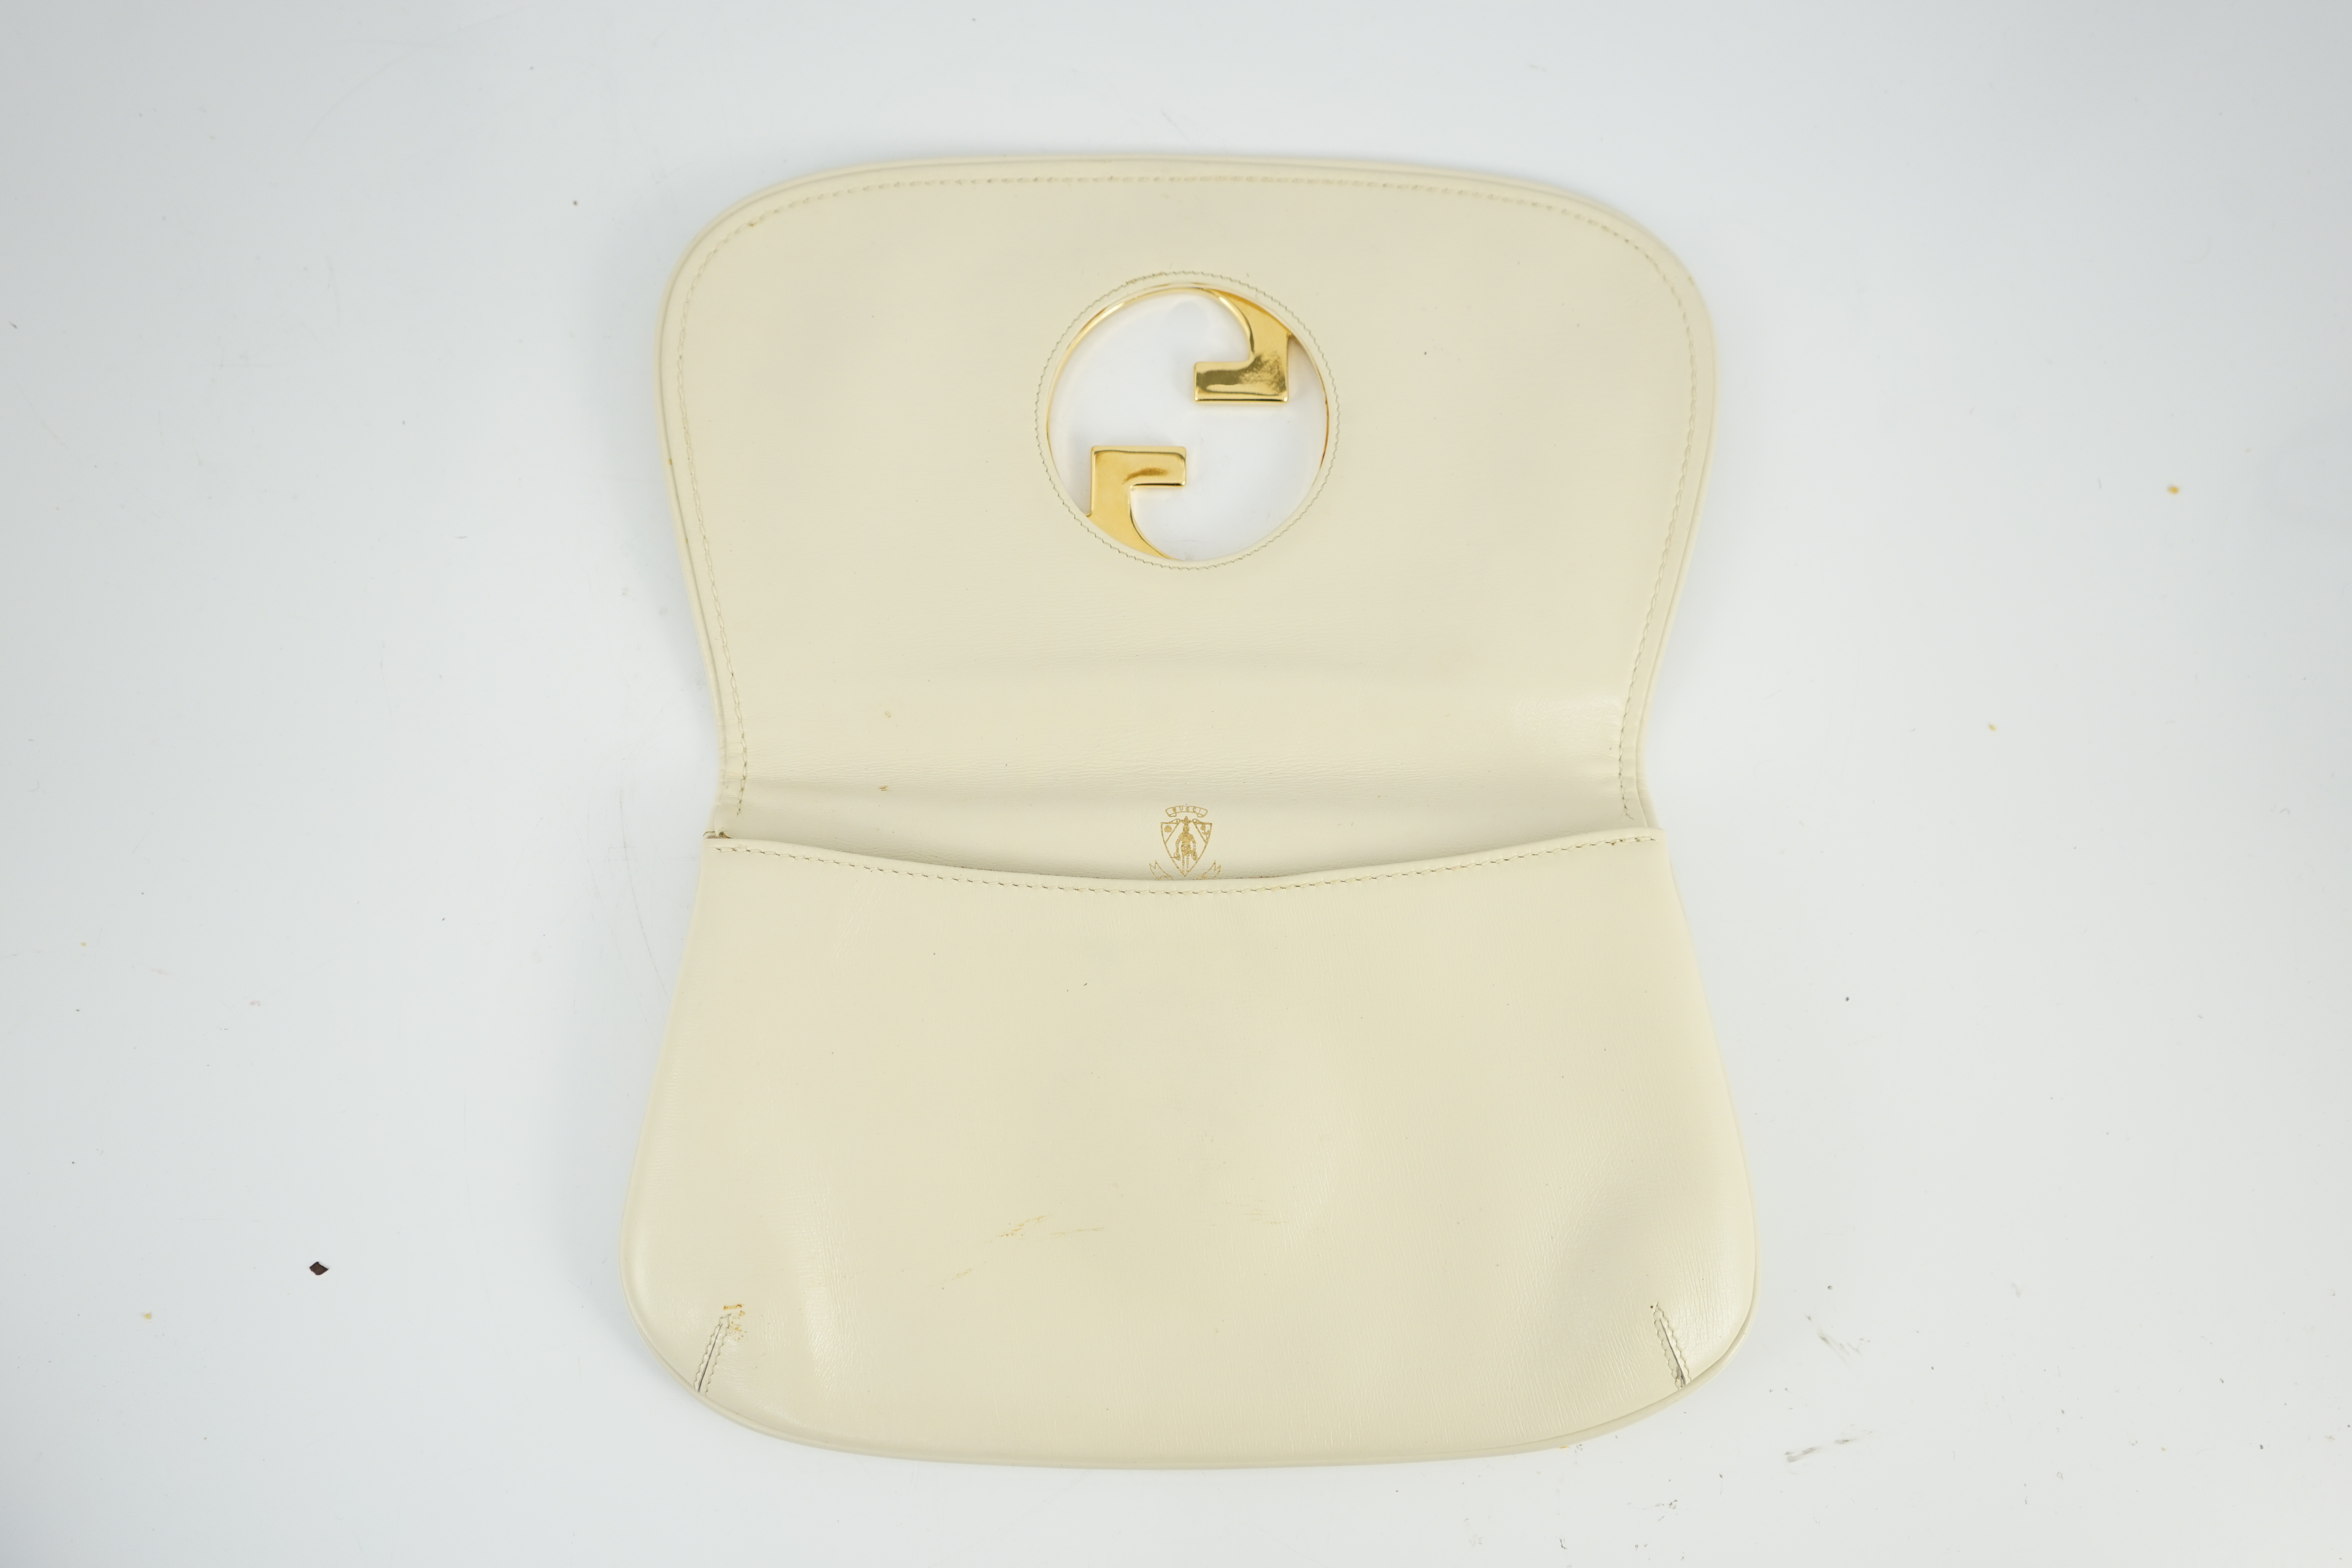 A vintage Gucci Blondie Unicorn ivory cream leather clutch bag, width 28cm, depth 4cm, height 16cm